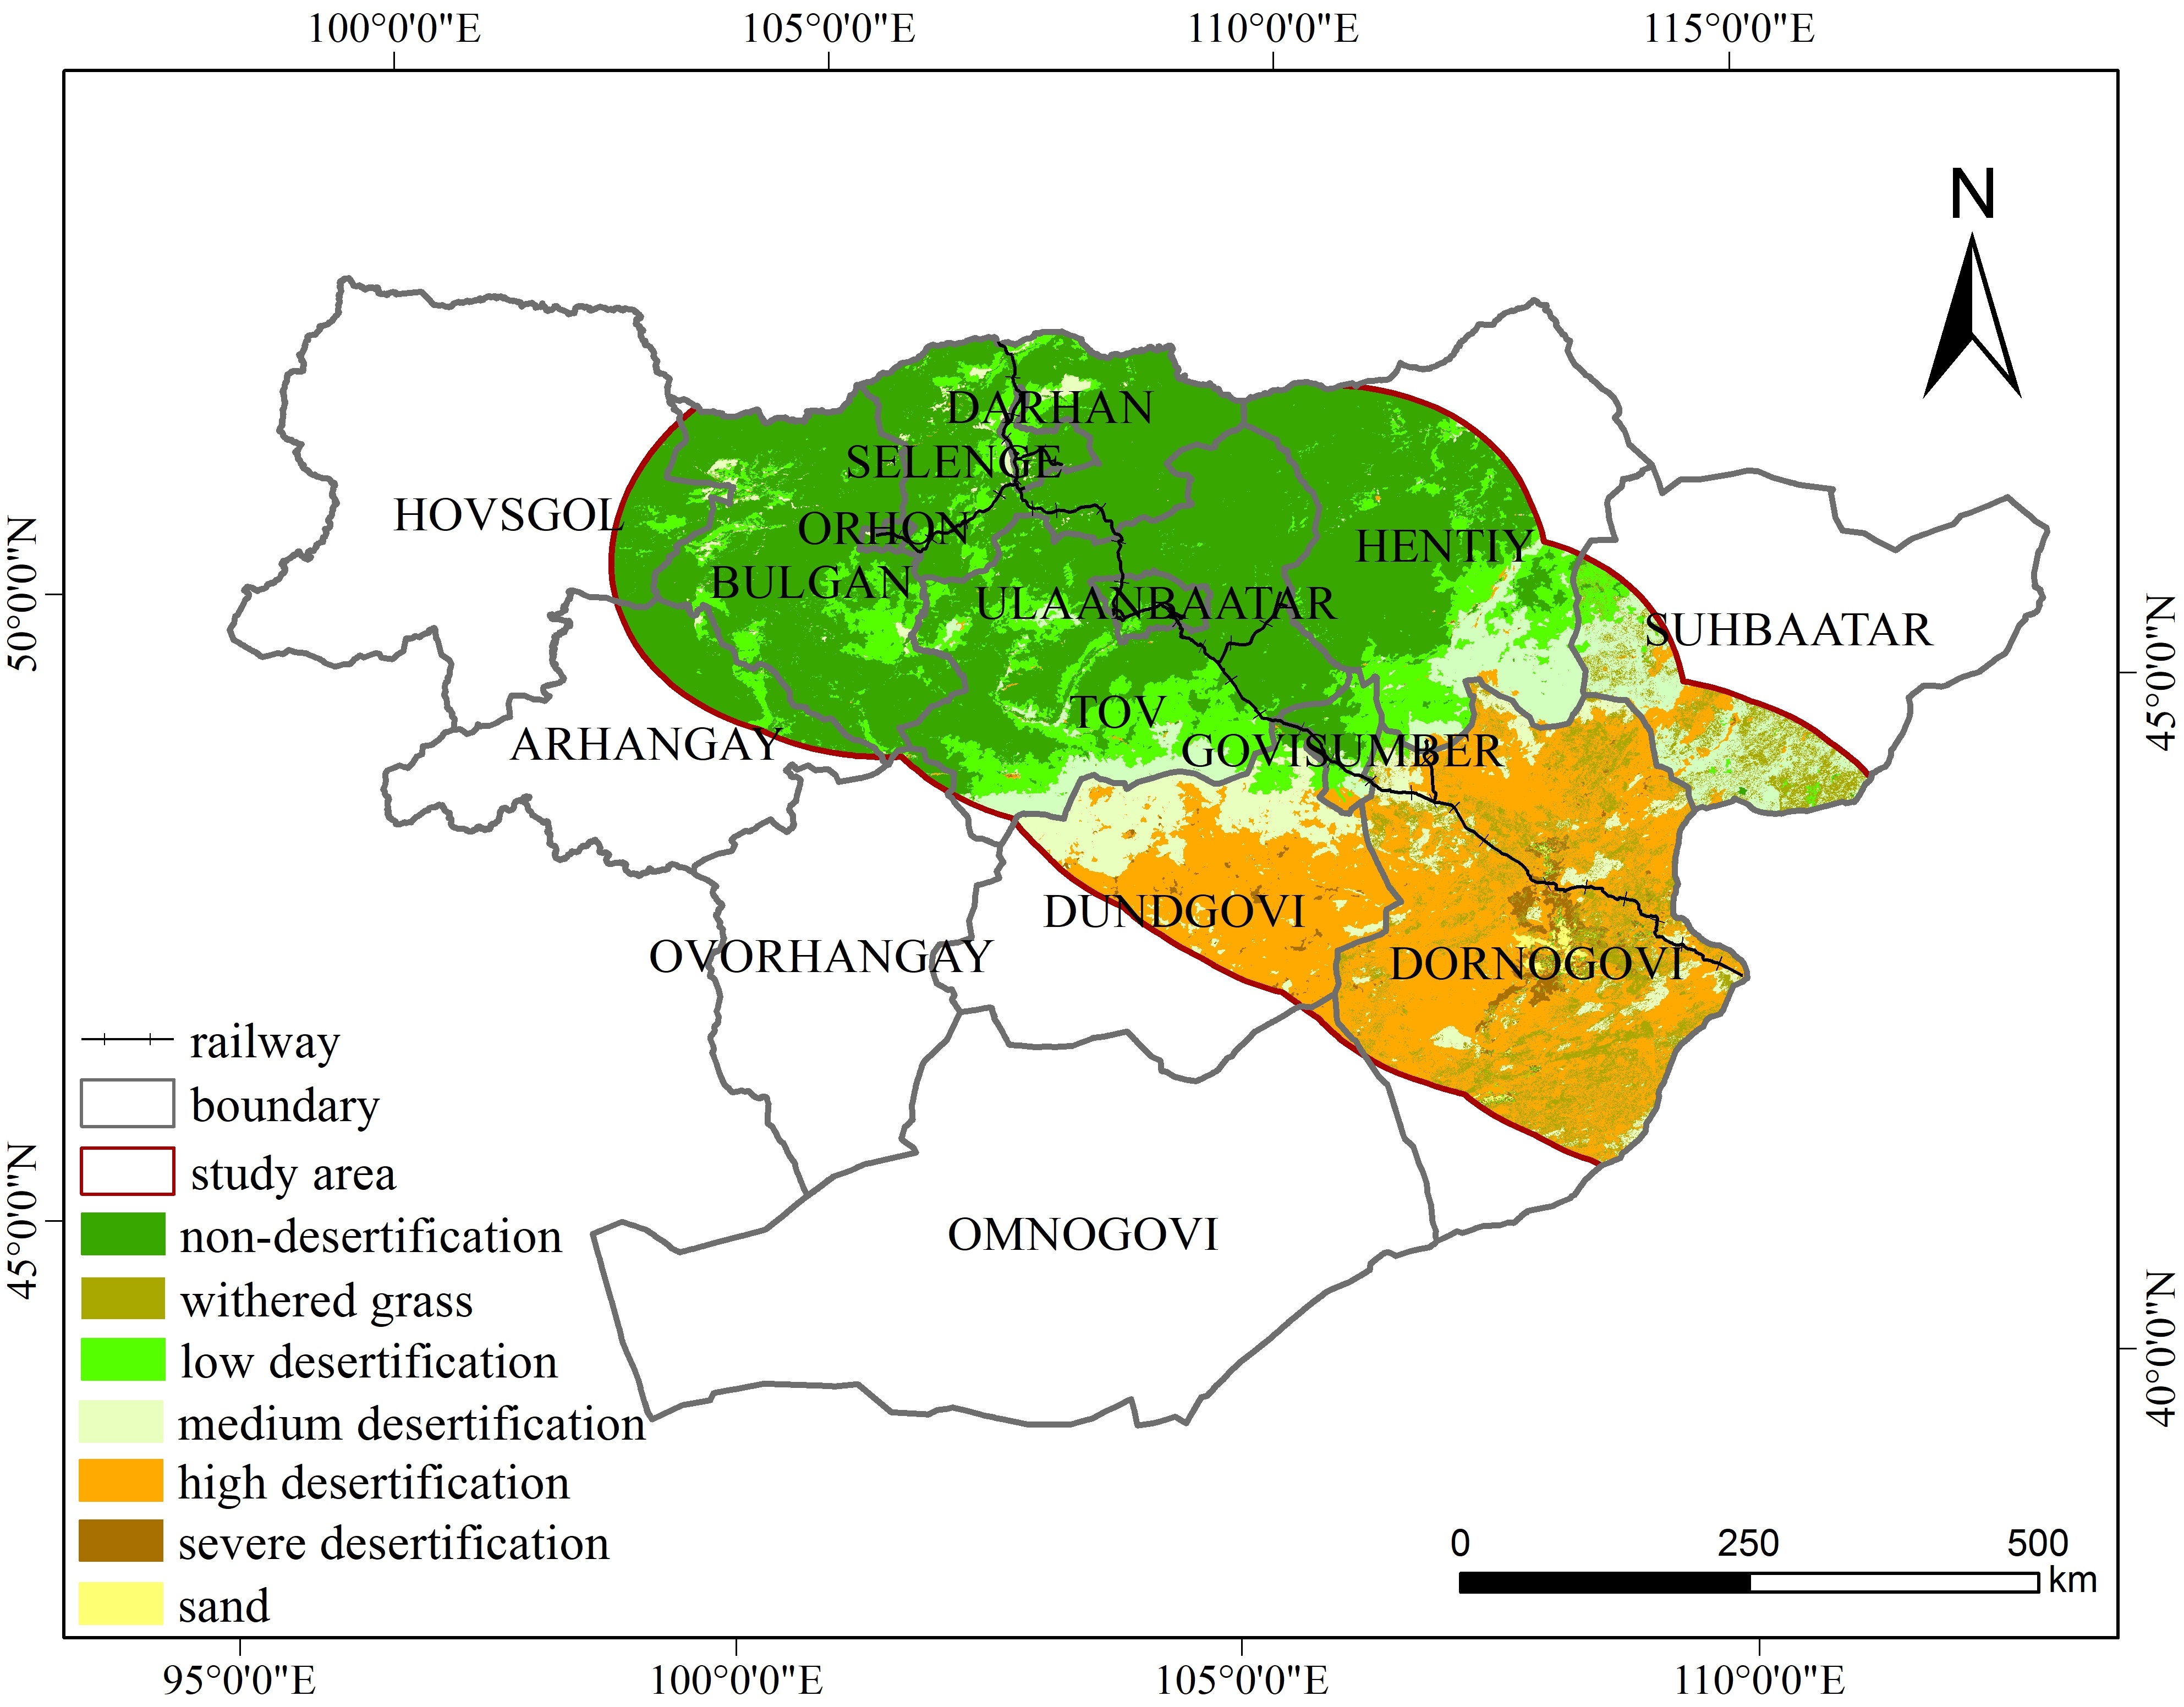 Desertification distribution data set along the China-Mongolia Railway (Mongolia section)